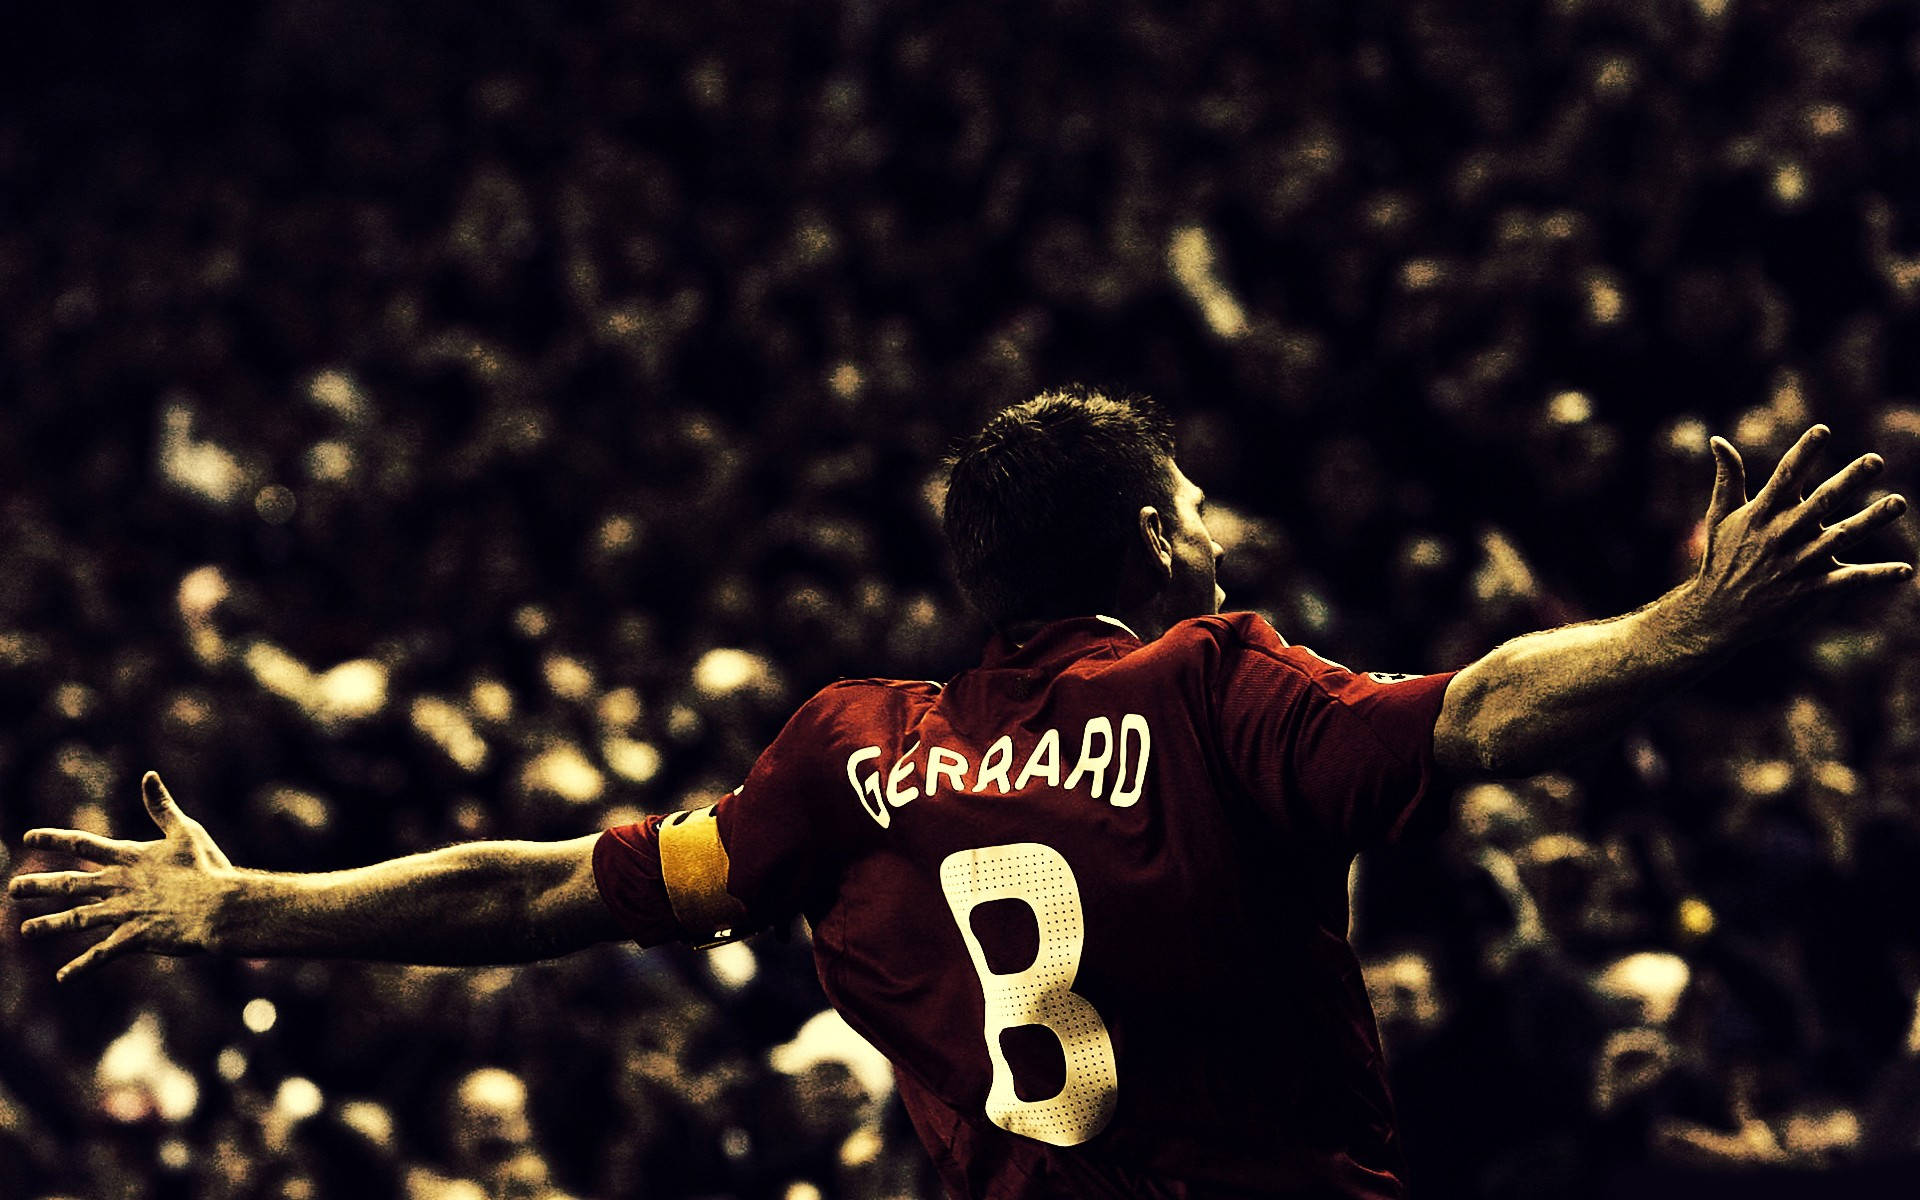 Steven Gerrard Red Jersey 8 Background